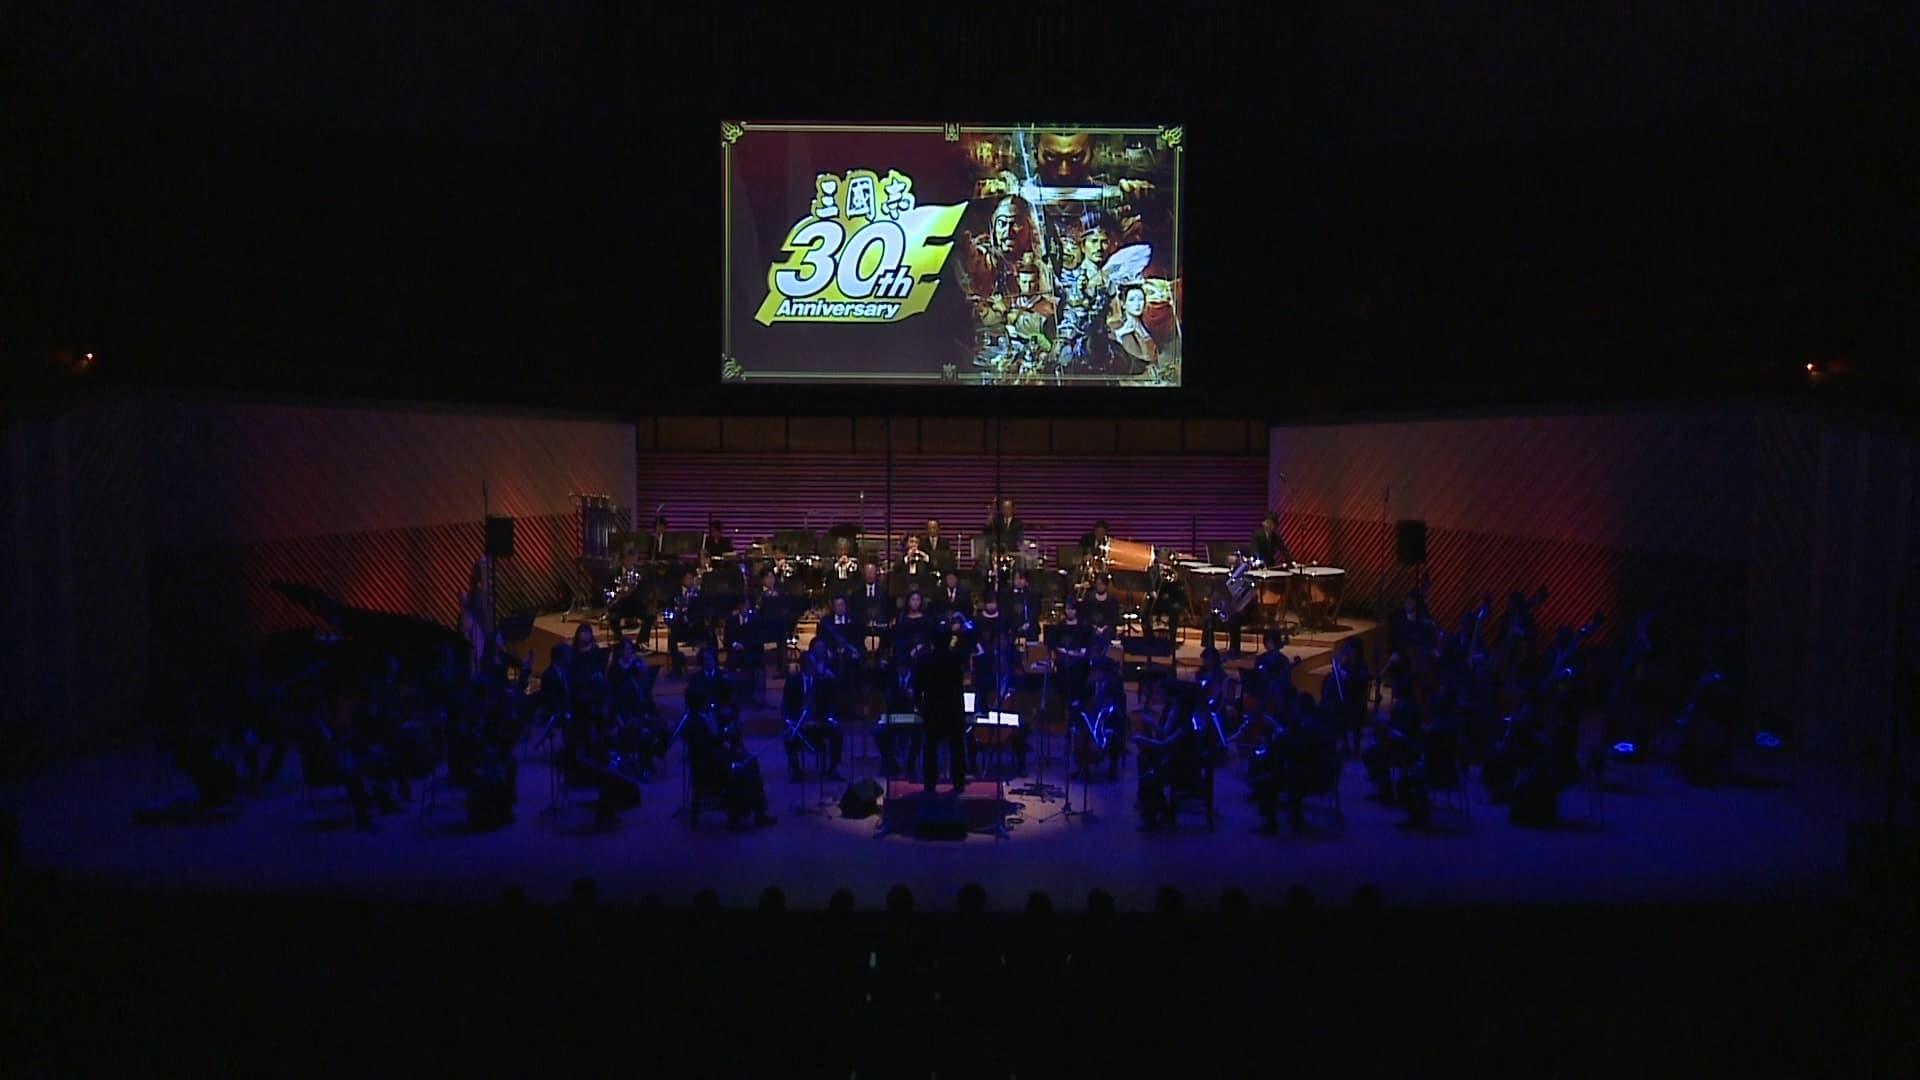 Sangokushi 30th Anniversary Concert backdrop